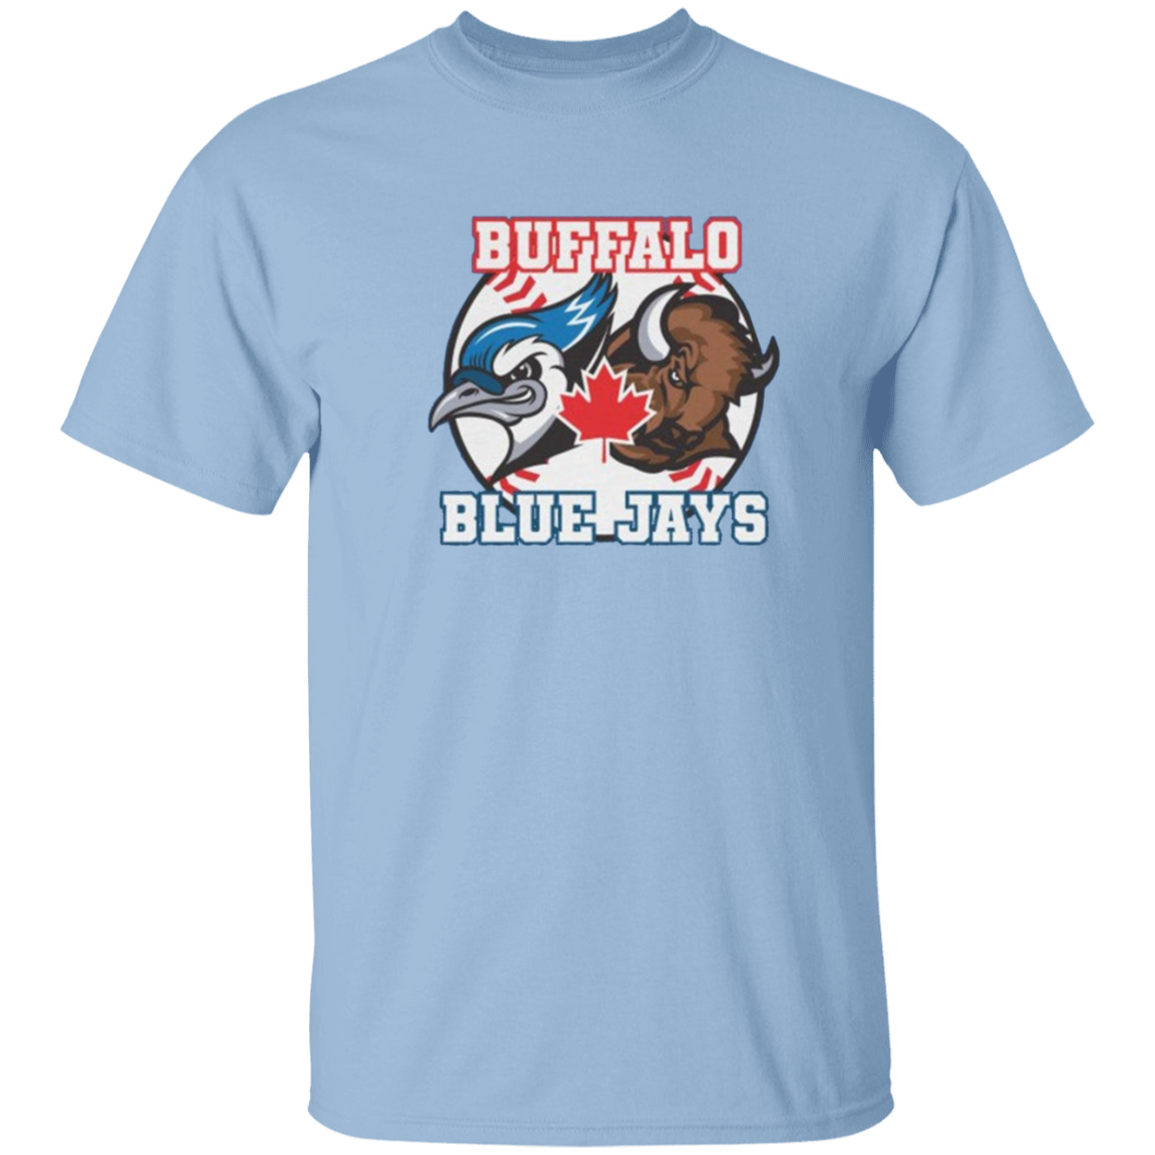 BUFFALO-BILLS-Buffalo-Blue-Jays-Toronto-Blue-Jays-Apparel-Canada-Baseball-Merch-T-SHIRT-FOR-FAN-2023